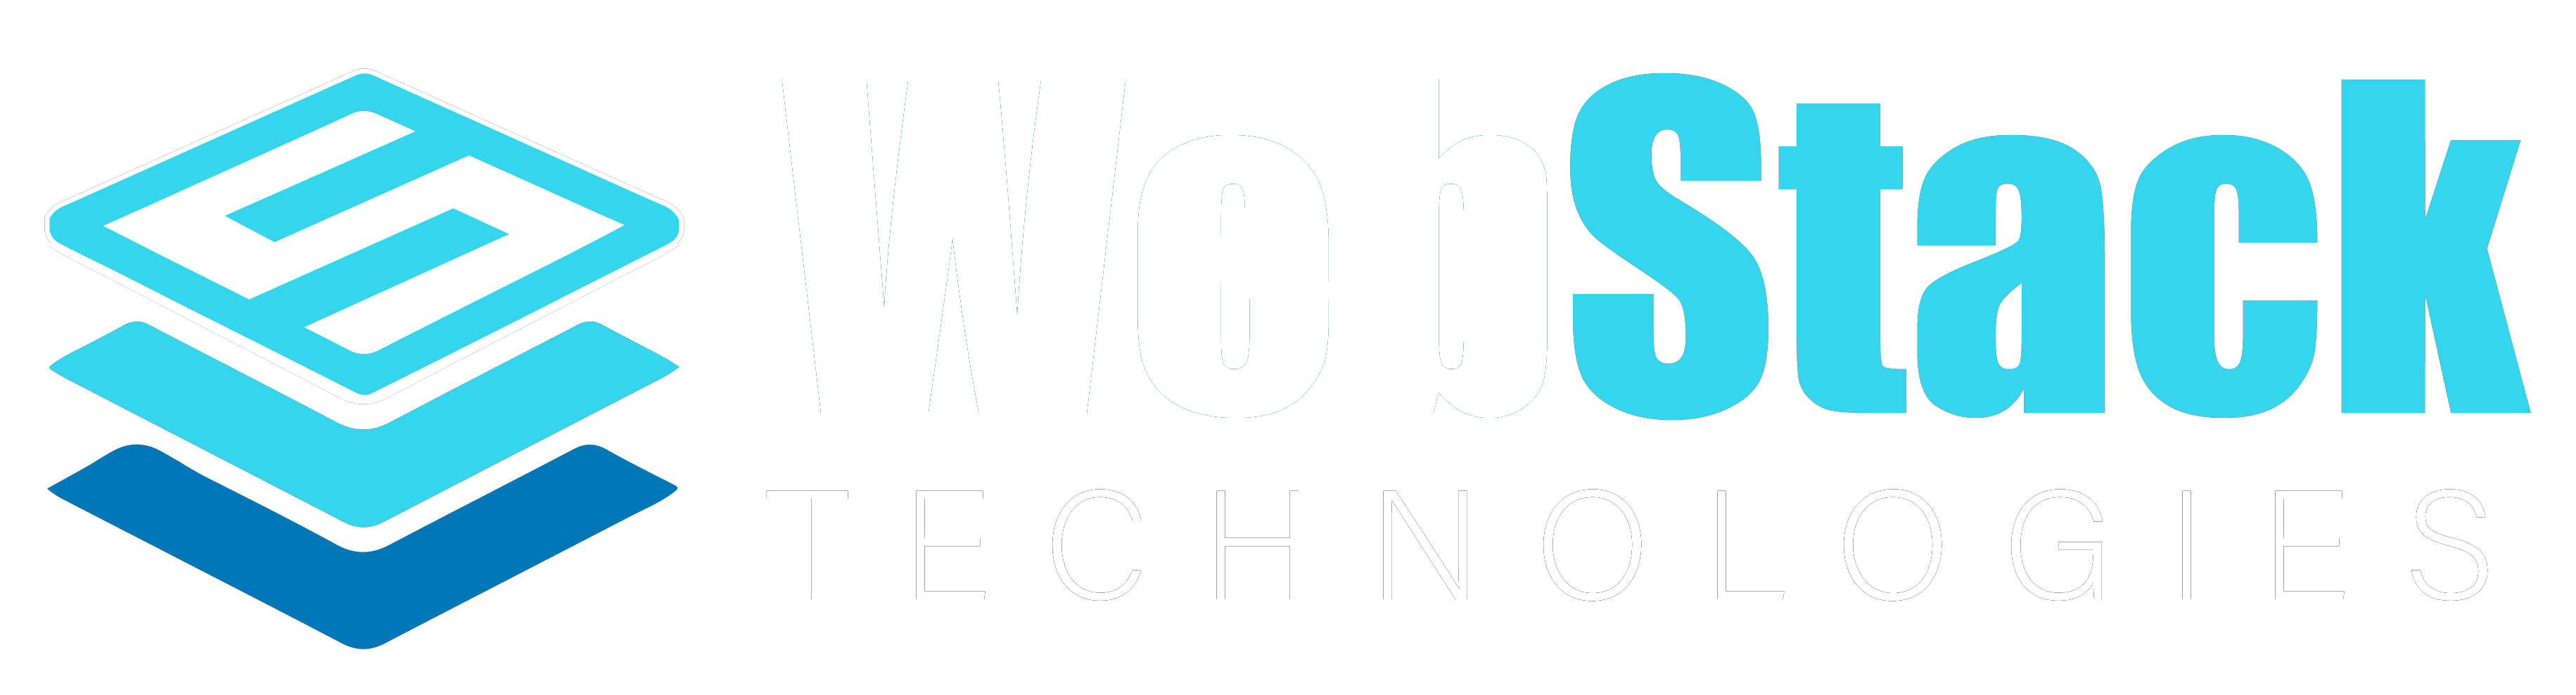 Web Stack Technologies